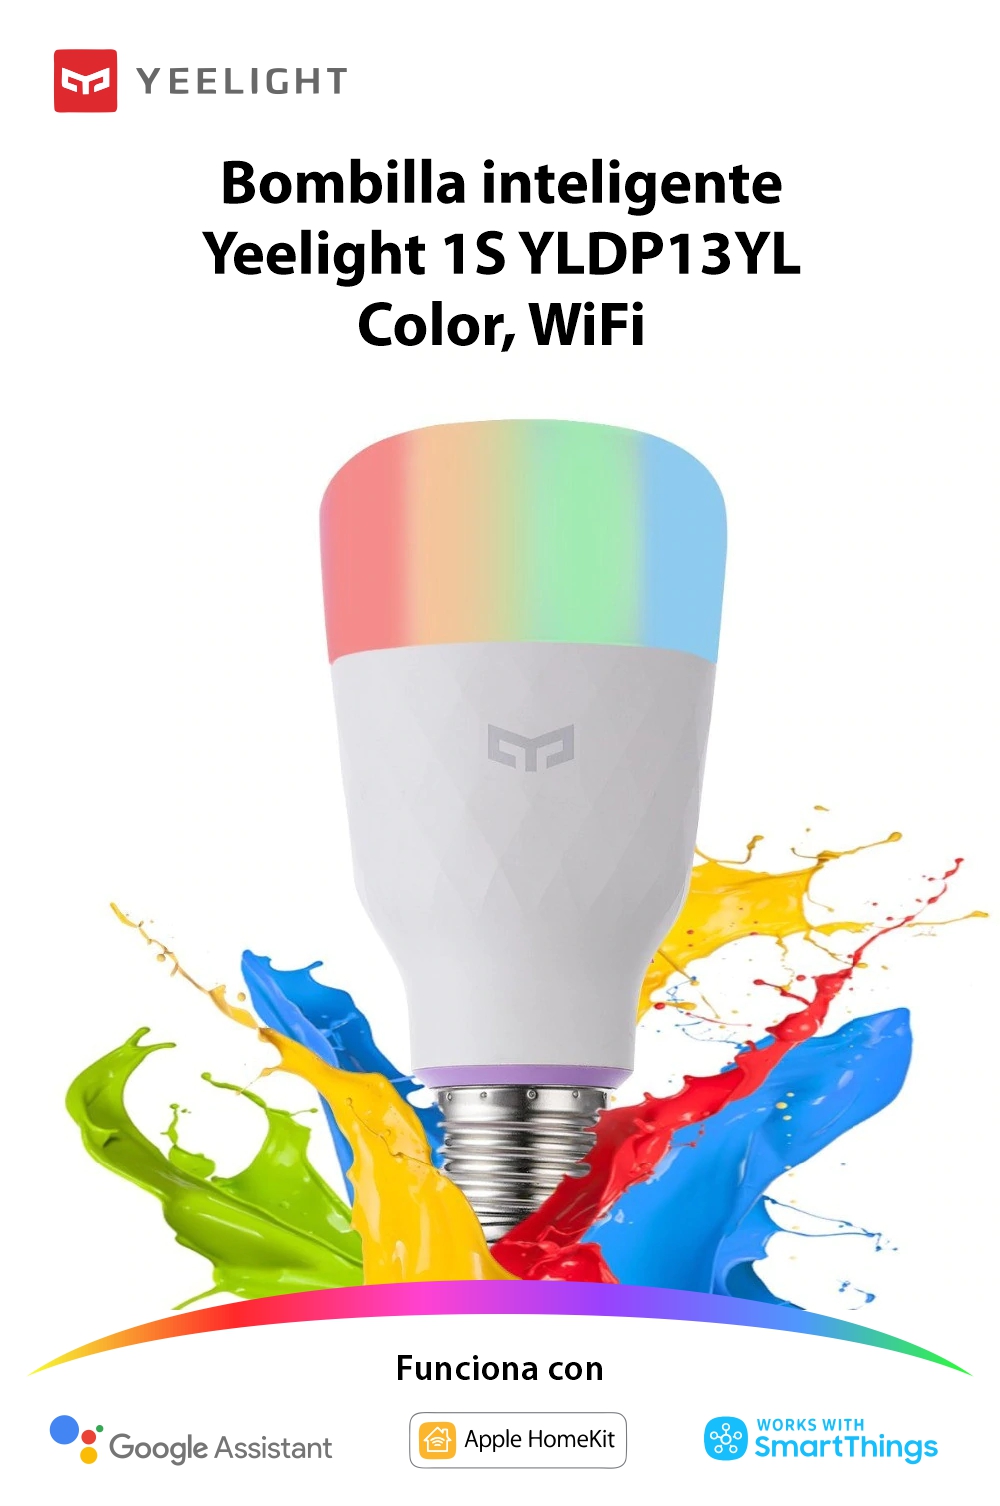 Bombilla inteligente YeeLight 1S YLDP13YL, Color, WiFi, 8,5 W, Compatible con Google Assistant, Apple HomeKit y SmartThings